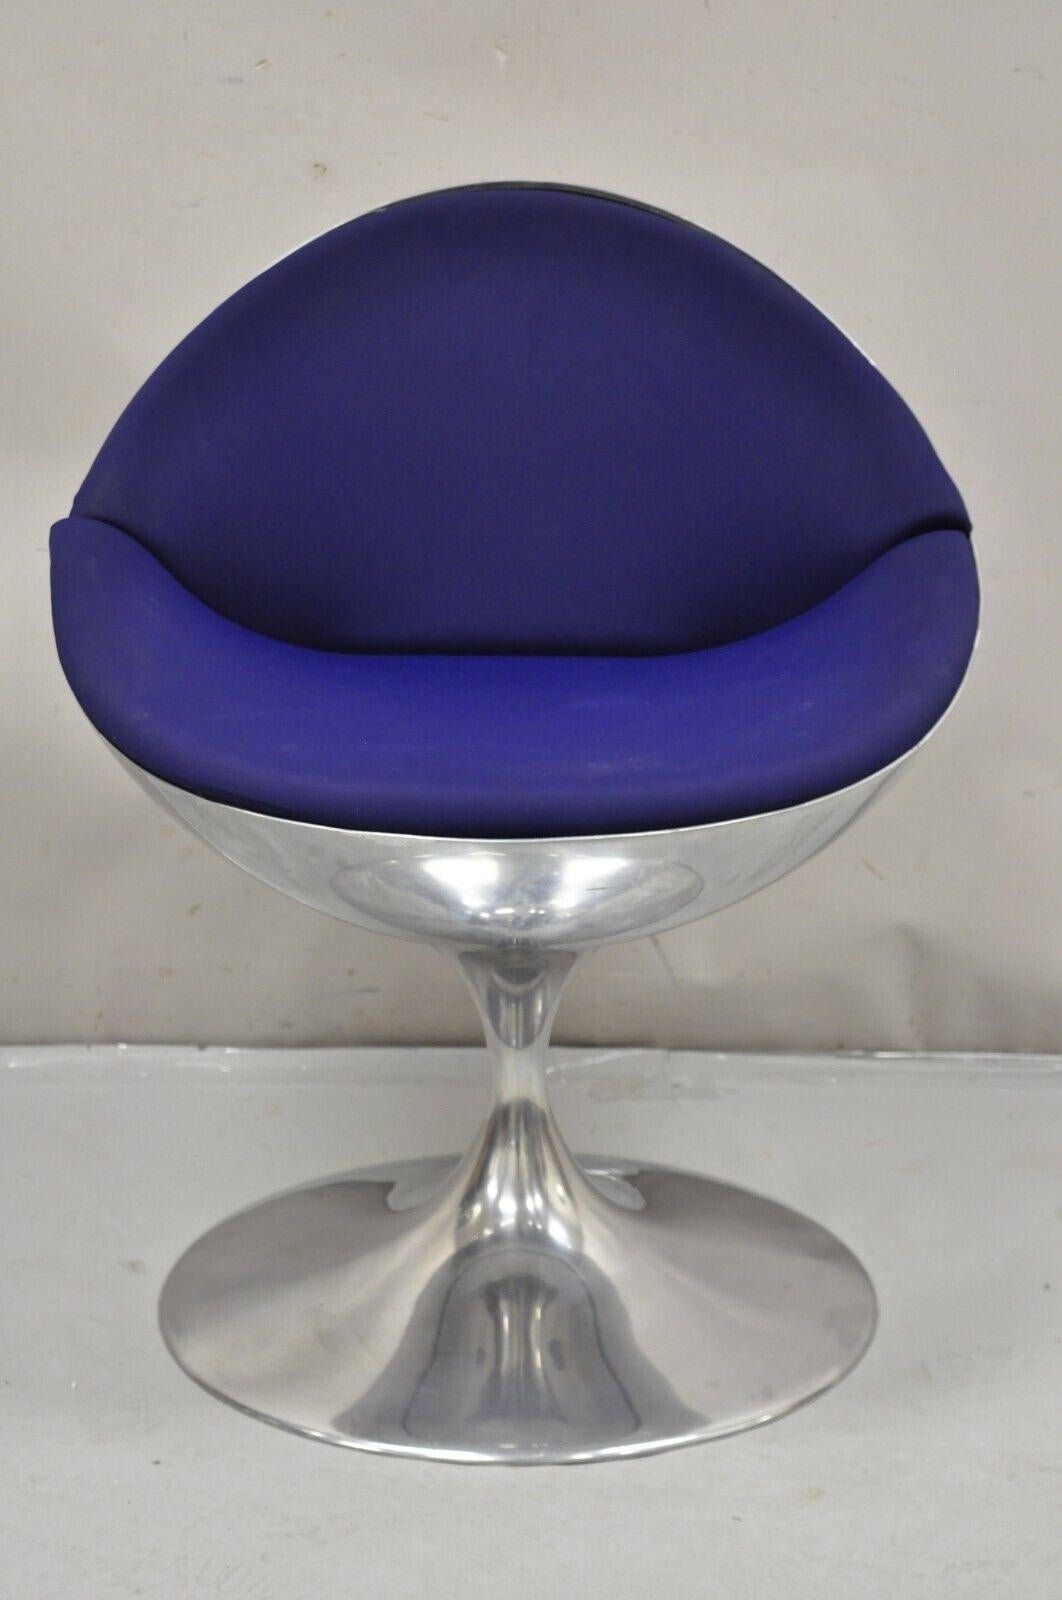 Prospettive Luna Swivel Saarinen Style Aluminum Blue Mid Century Style Dining Club Chair Designed by Paolo Chiantini. Item features a heavy metal frame, swivel seat, tulip pedestal base, original stamp, blue stretch foam fabric. Original retail